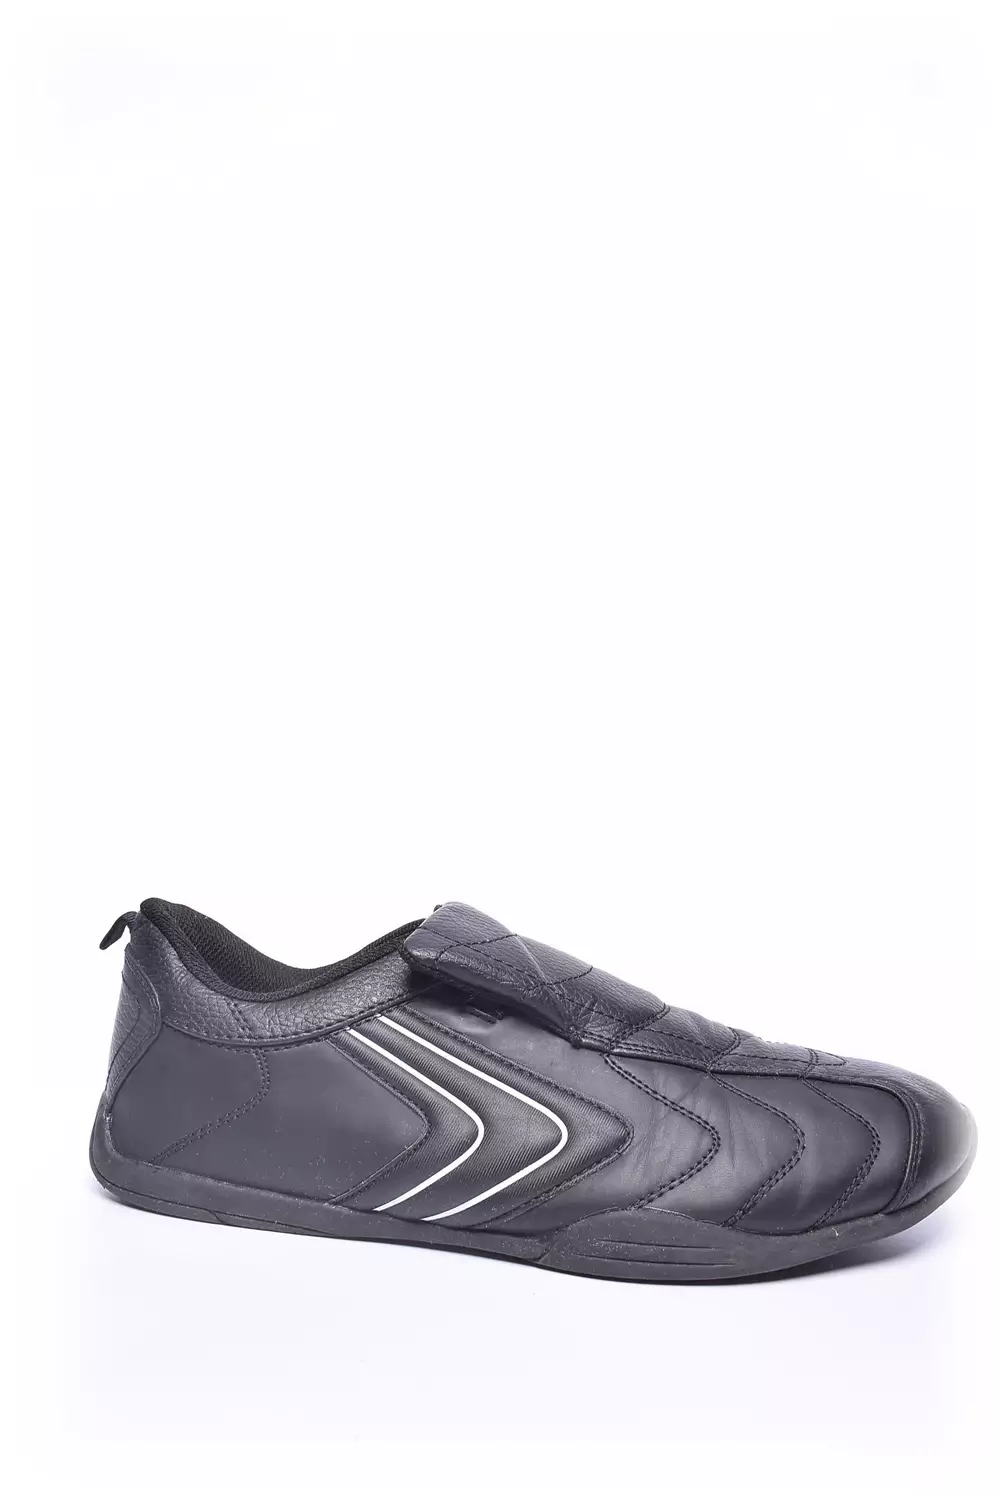 Cruel diameter Lying Pantofi sport barbati - Memphis One | Shoemix.ro